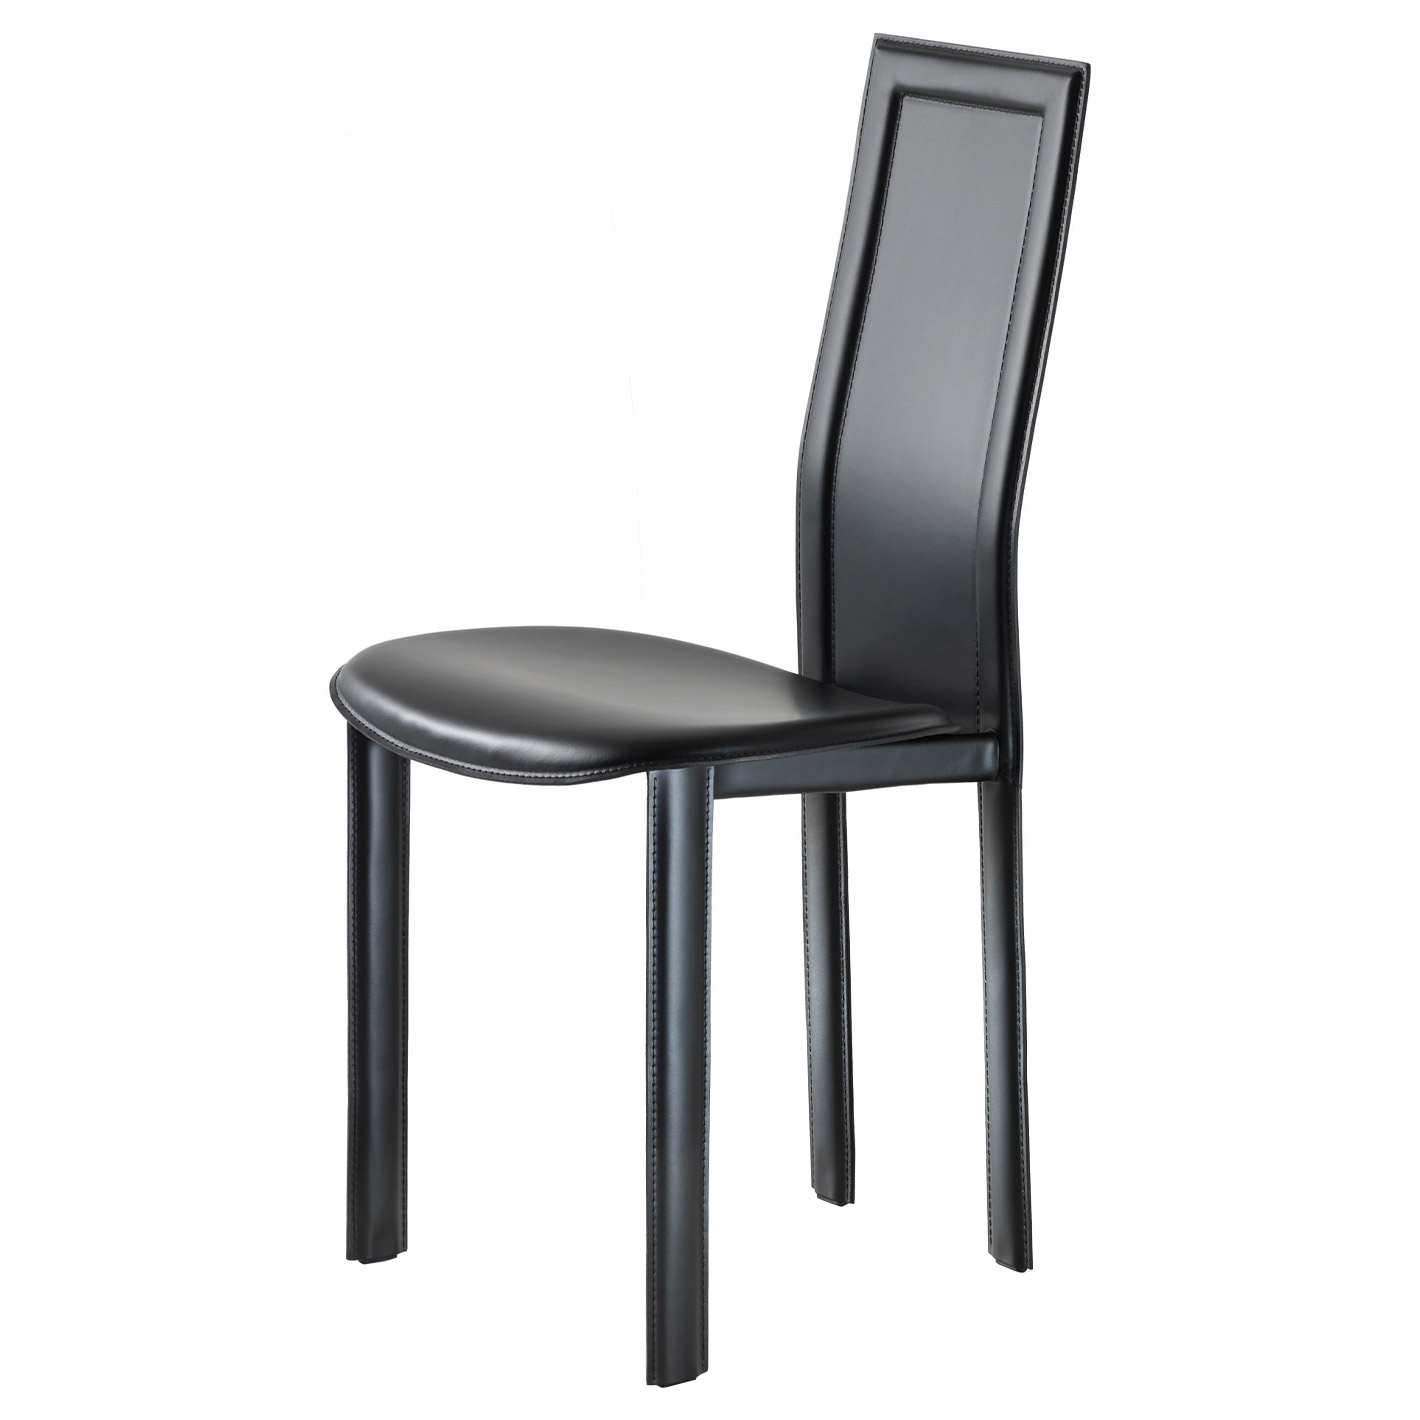 Stühle unter 500 Euro - LARA Stuhl